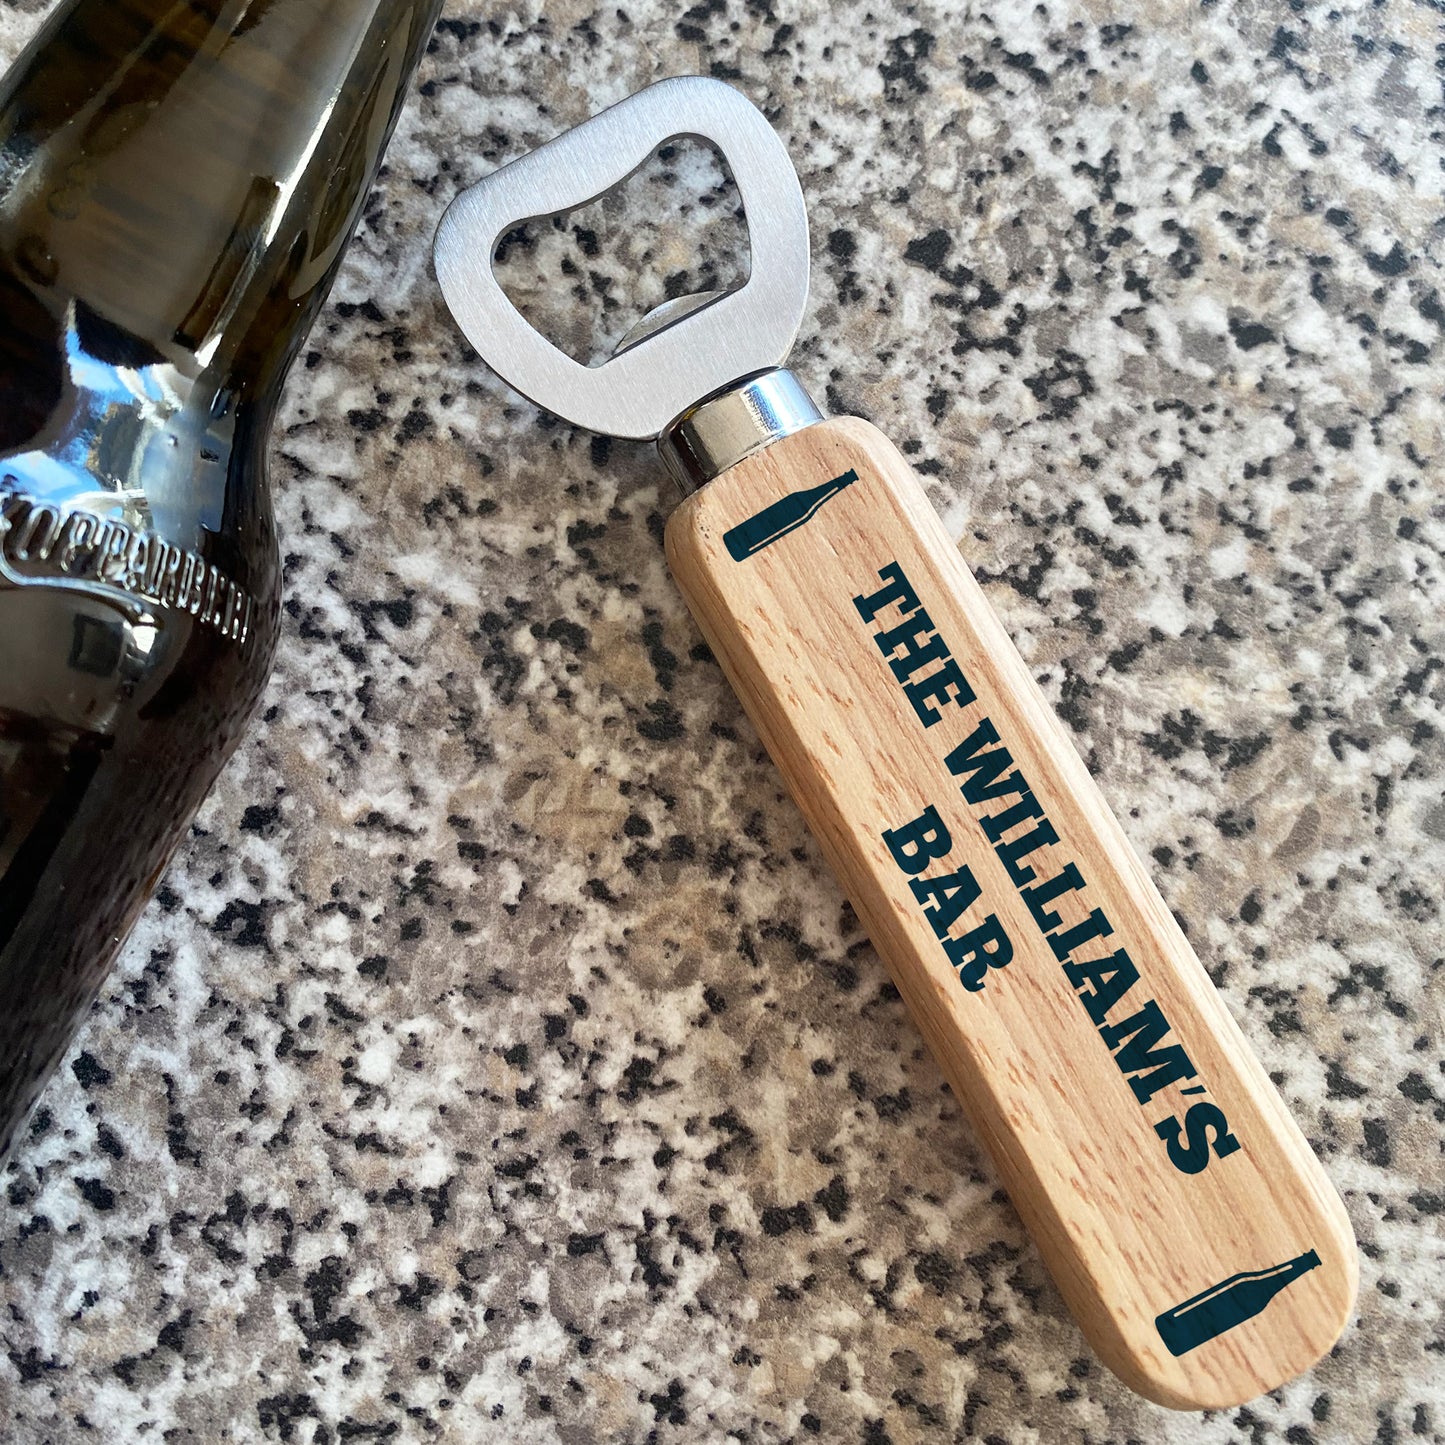 Personalised Novelty Beer Bottle Opener Home Bar Accessories